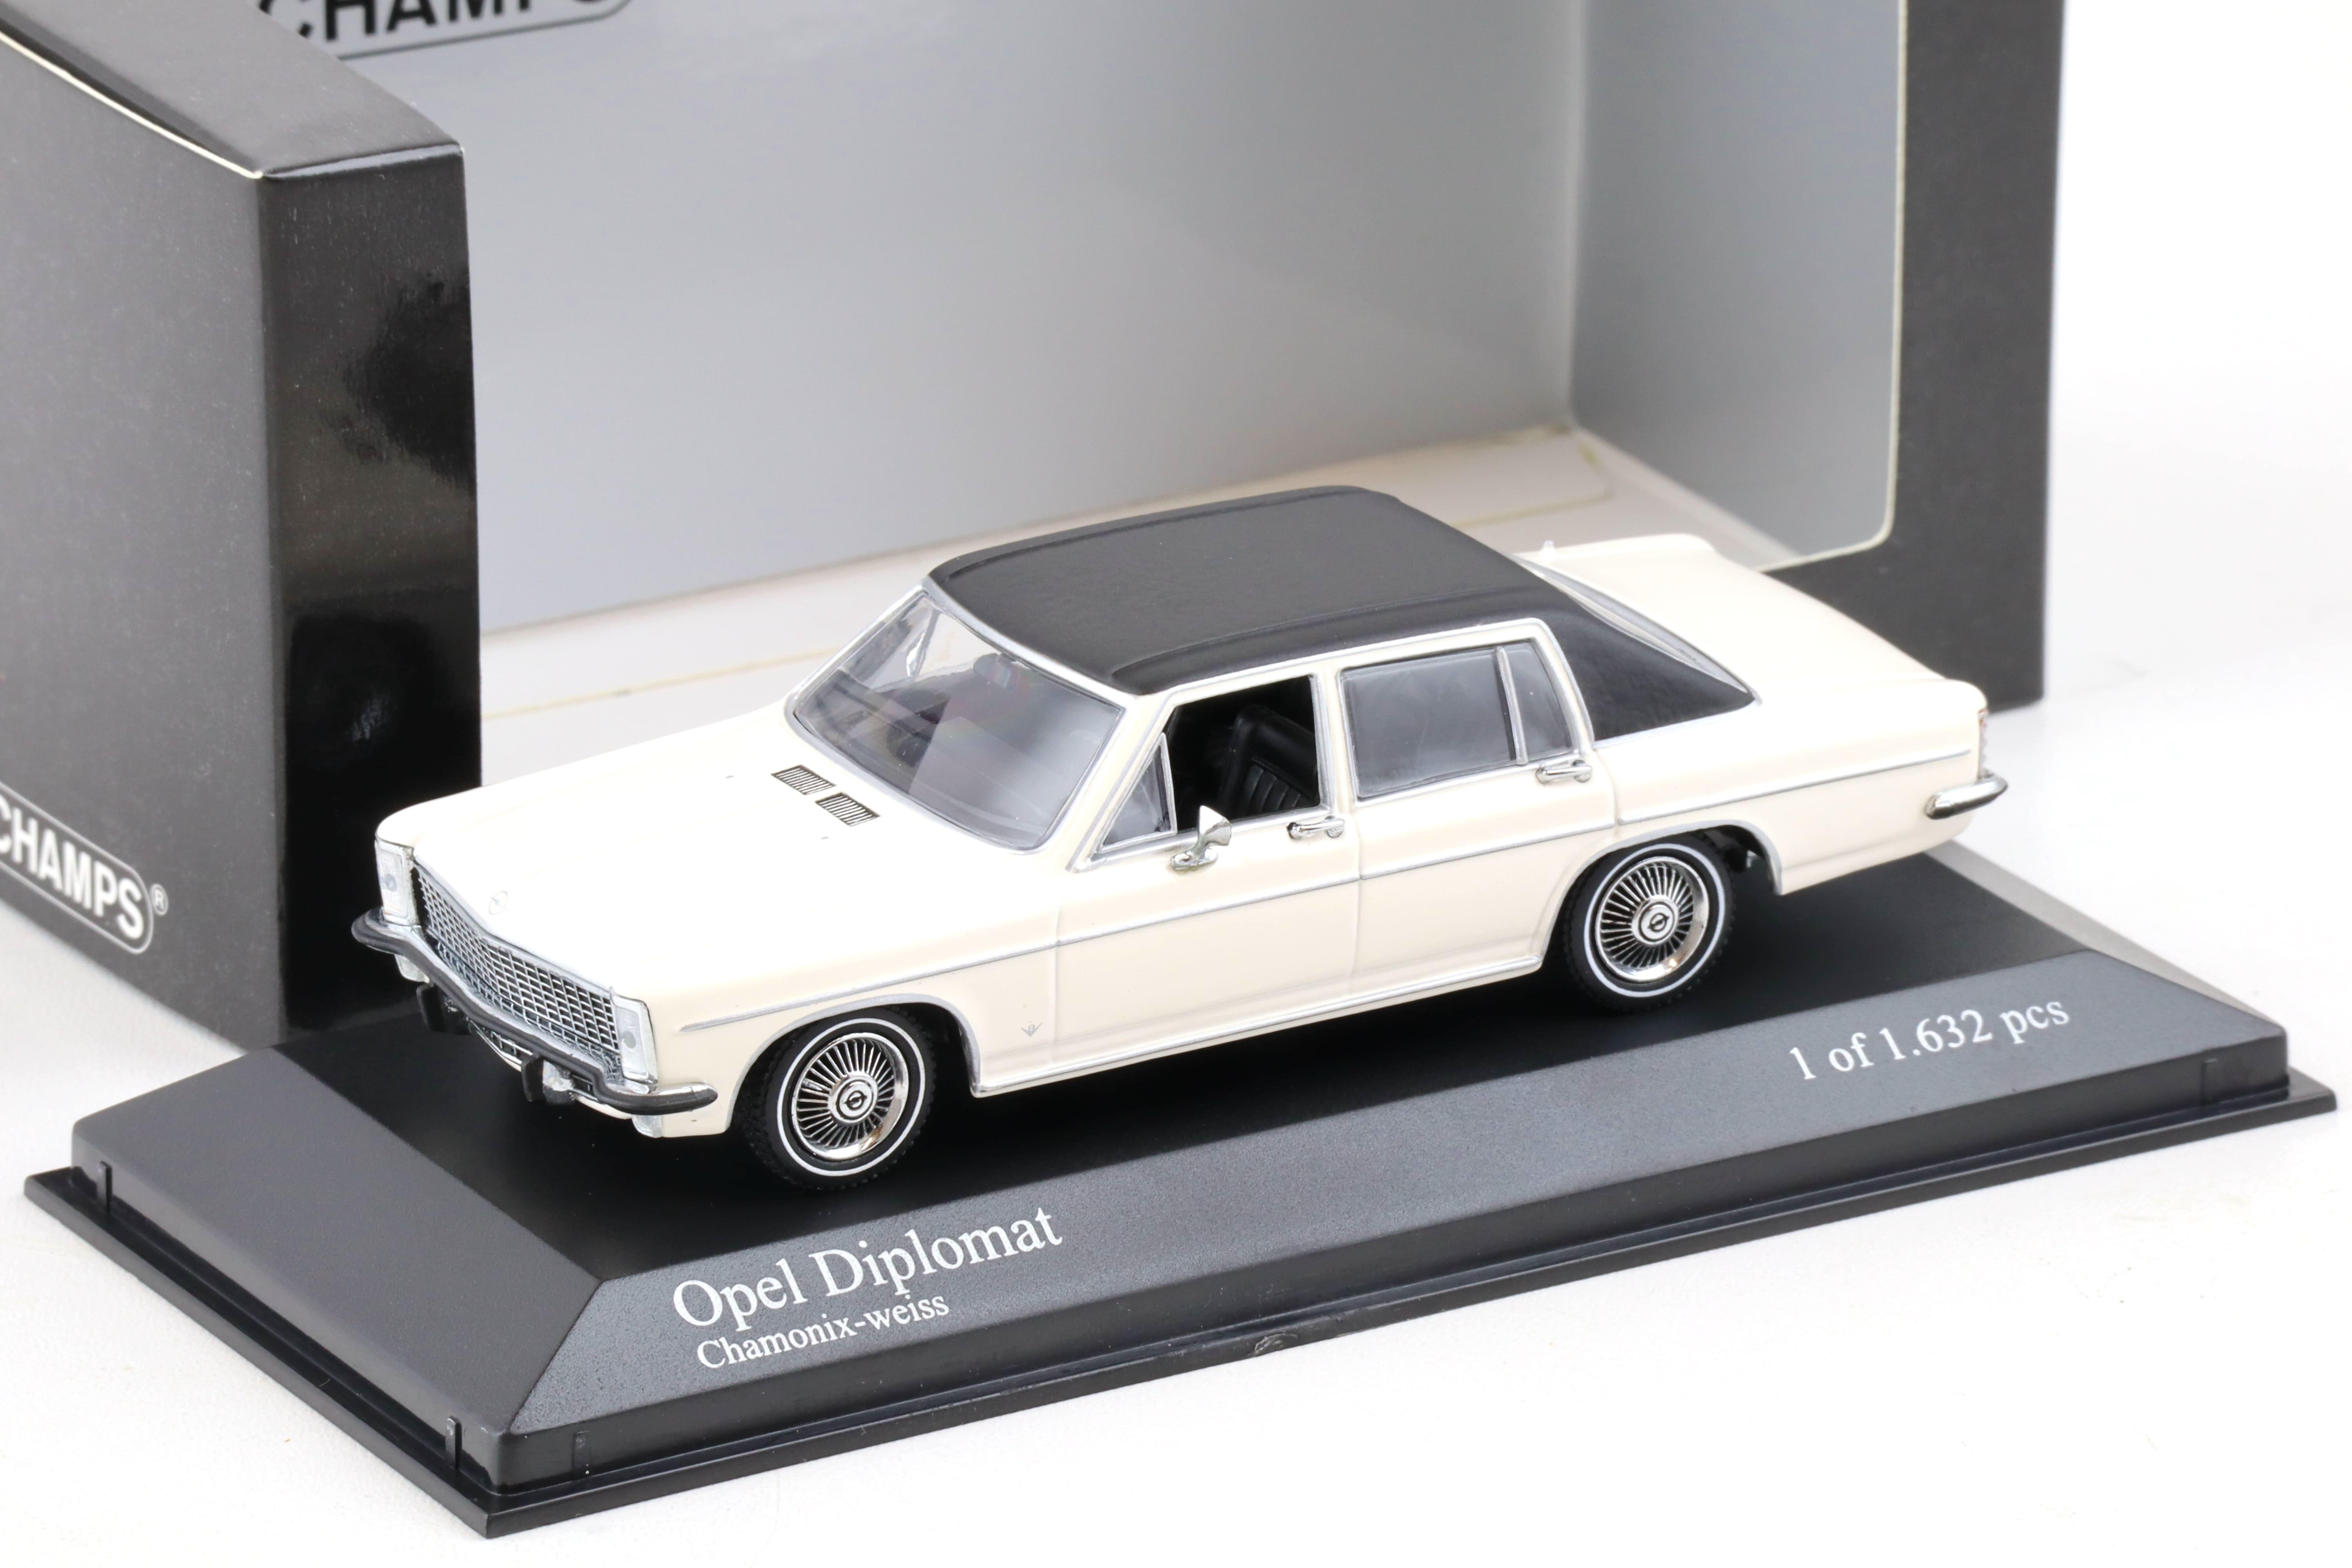 1:43 Minichamps Opel Diplomat Limousine 1968 Chamonix white/ black roof